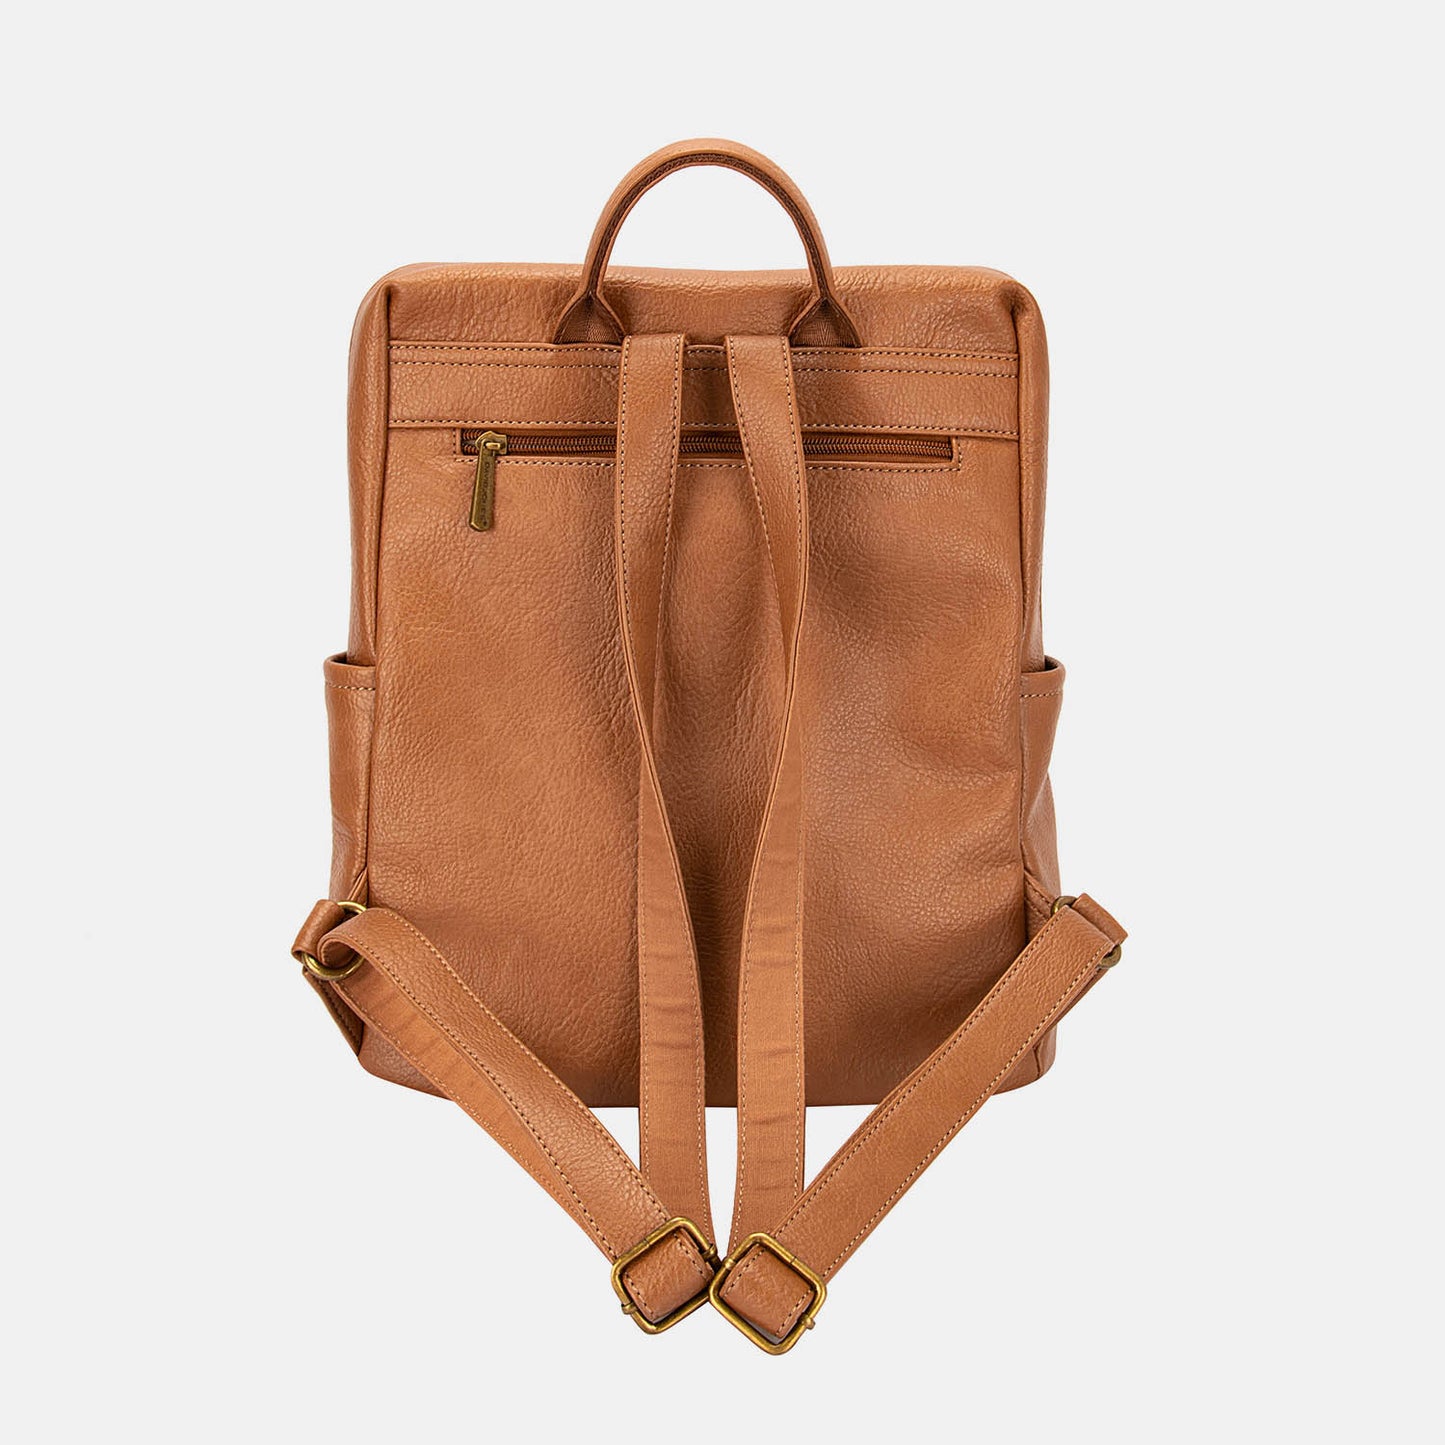 Backpack Bag